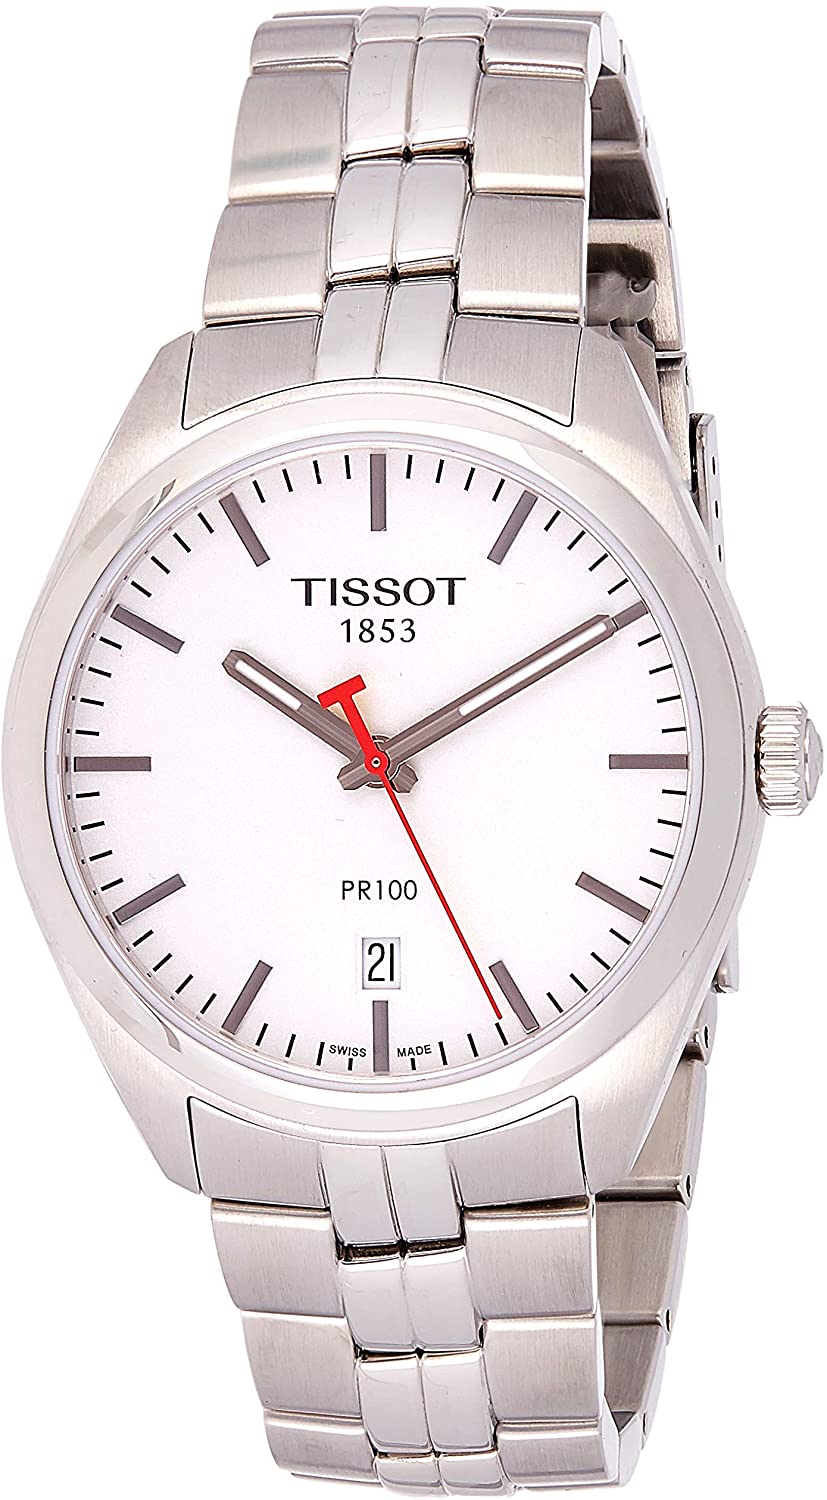 Tissot Men's Quartz Watch T1014101103101